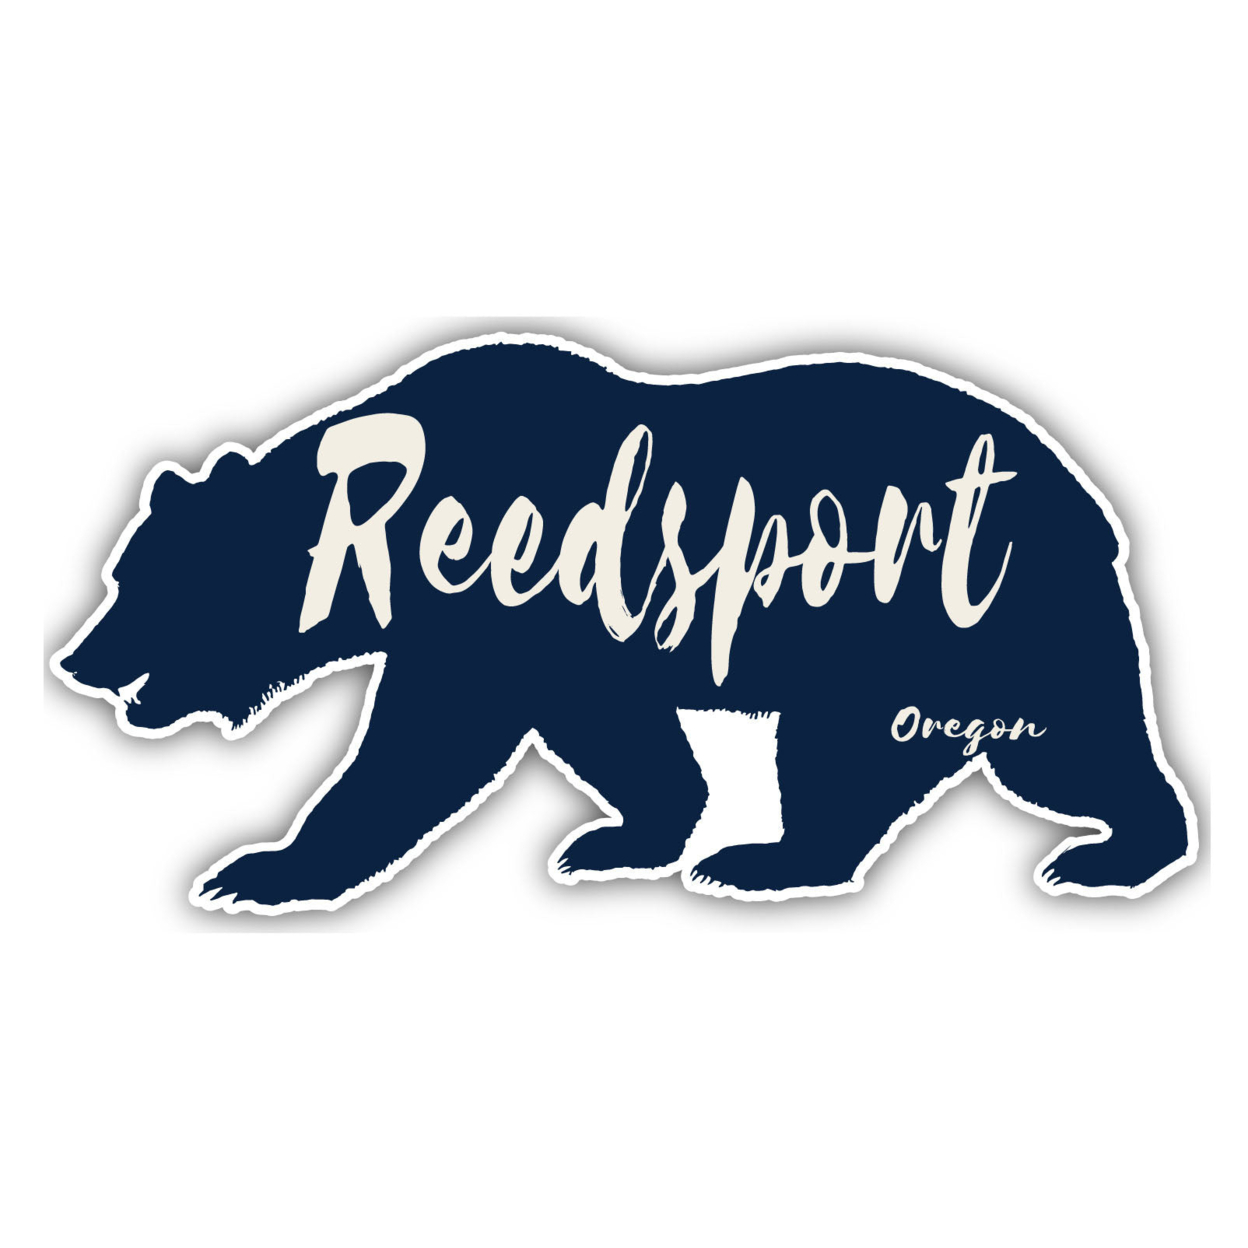 Reedsport Oregon Souvenir Decorative Stickers (Choose Theme And Size) - Single Unit, 2-Inch, Bear